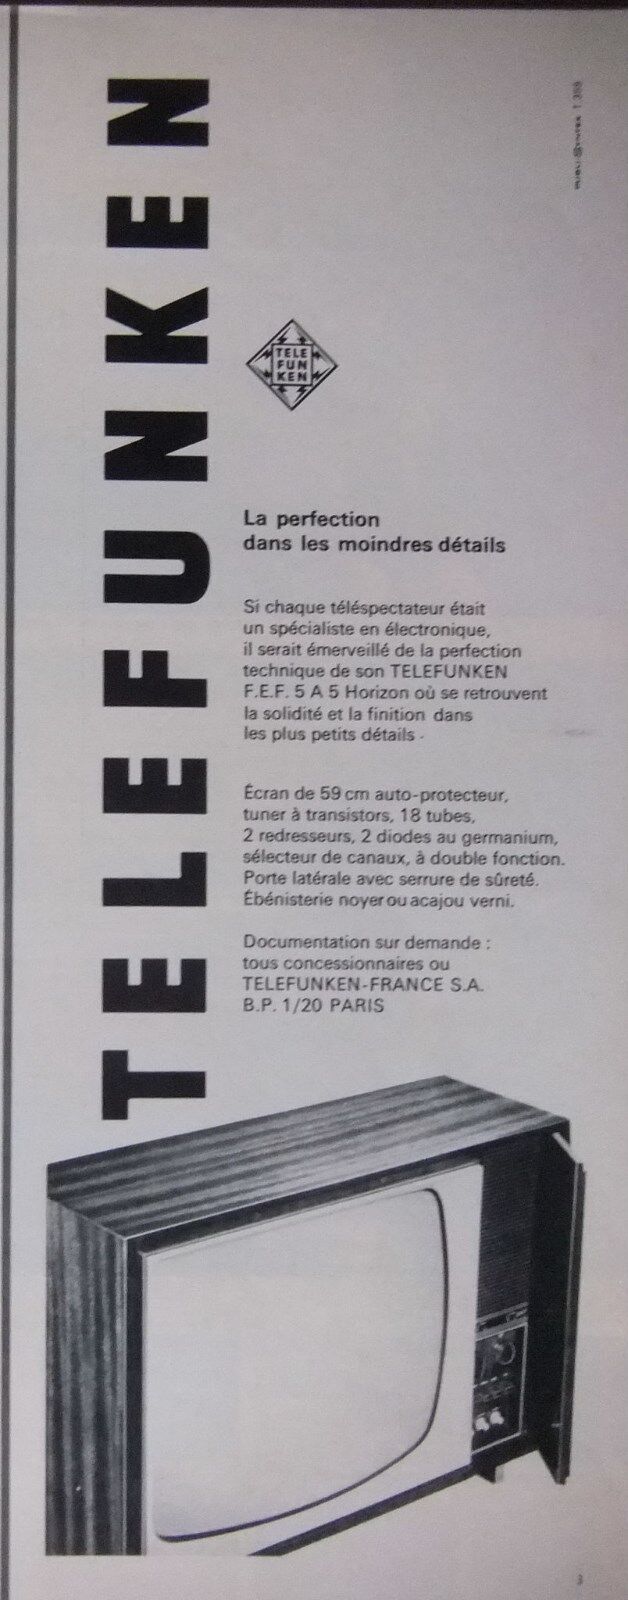 1967 TELEFUNKEN ADVERTISING PERFECTION IN EVERY DETAIL - ADVERTISING